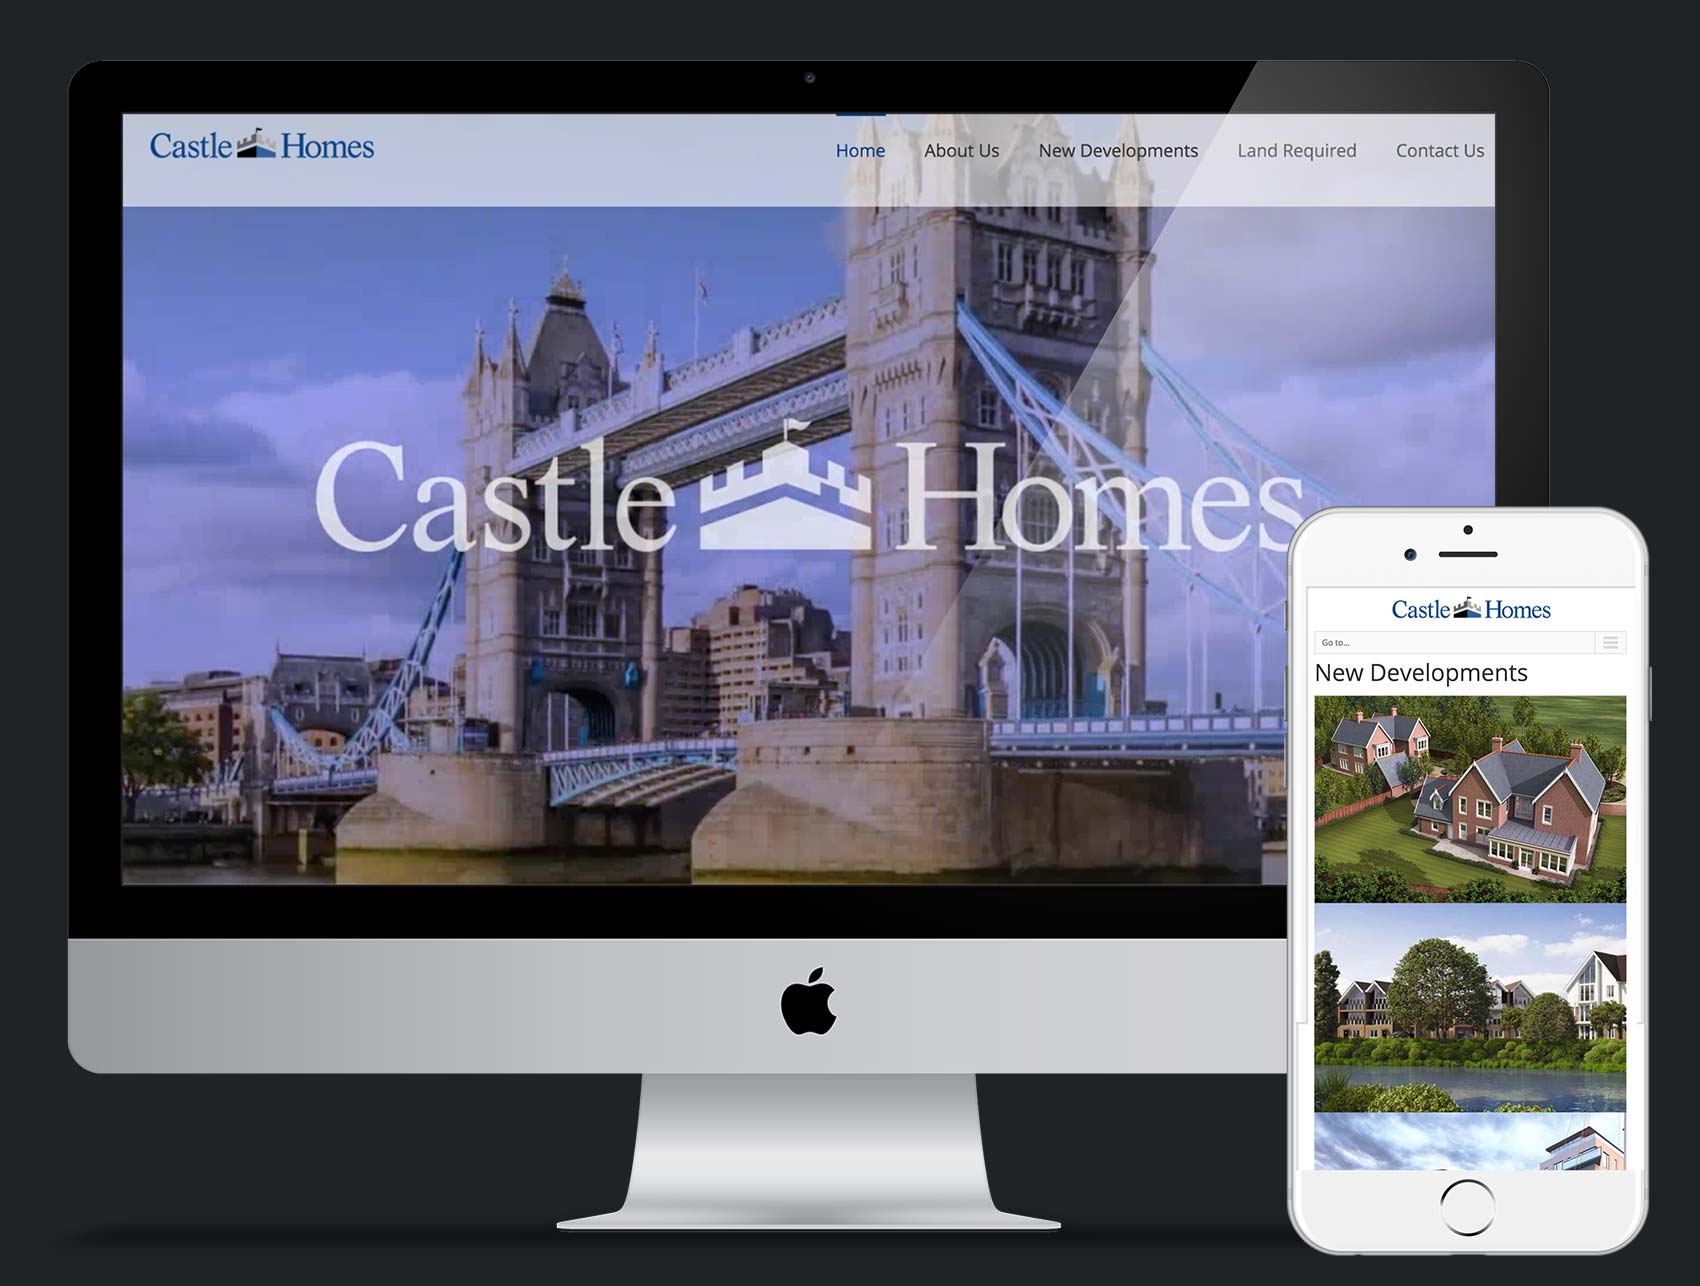 Castle Homes website design and build using Wordpress